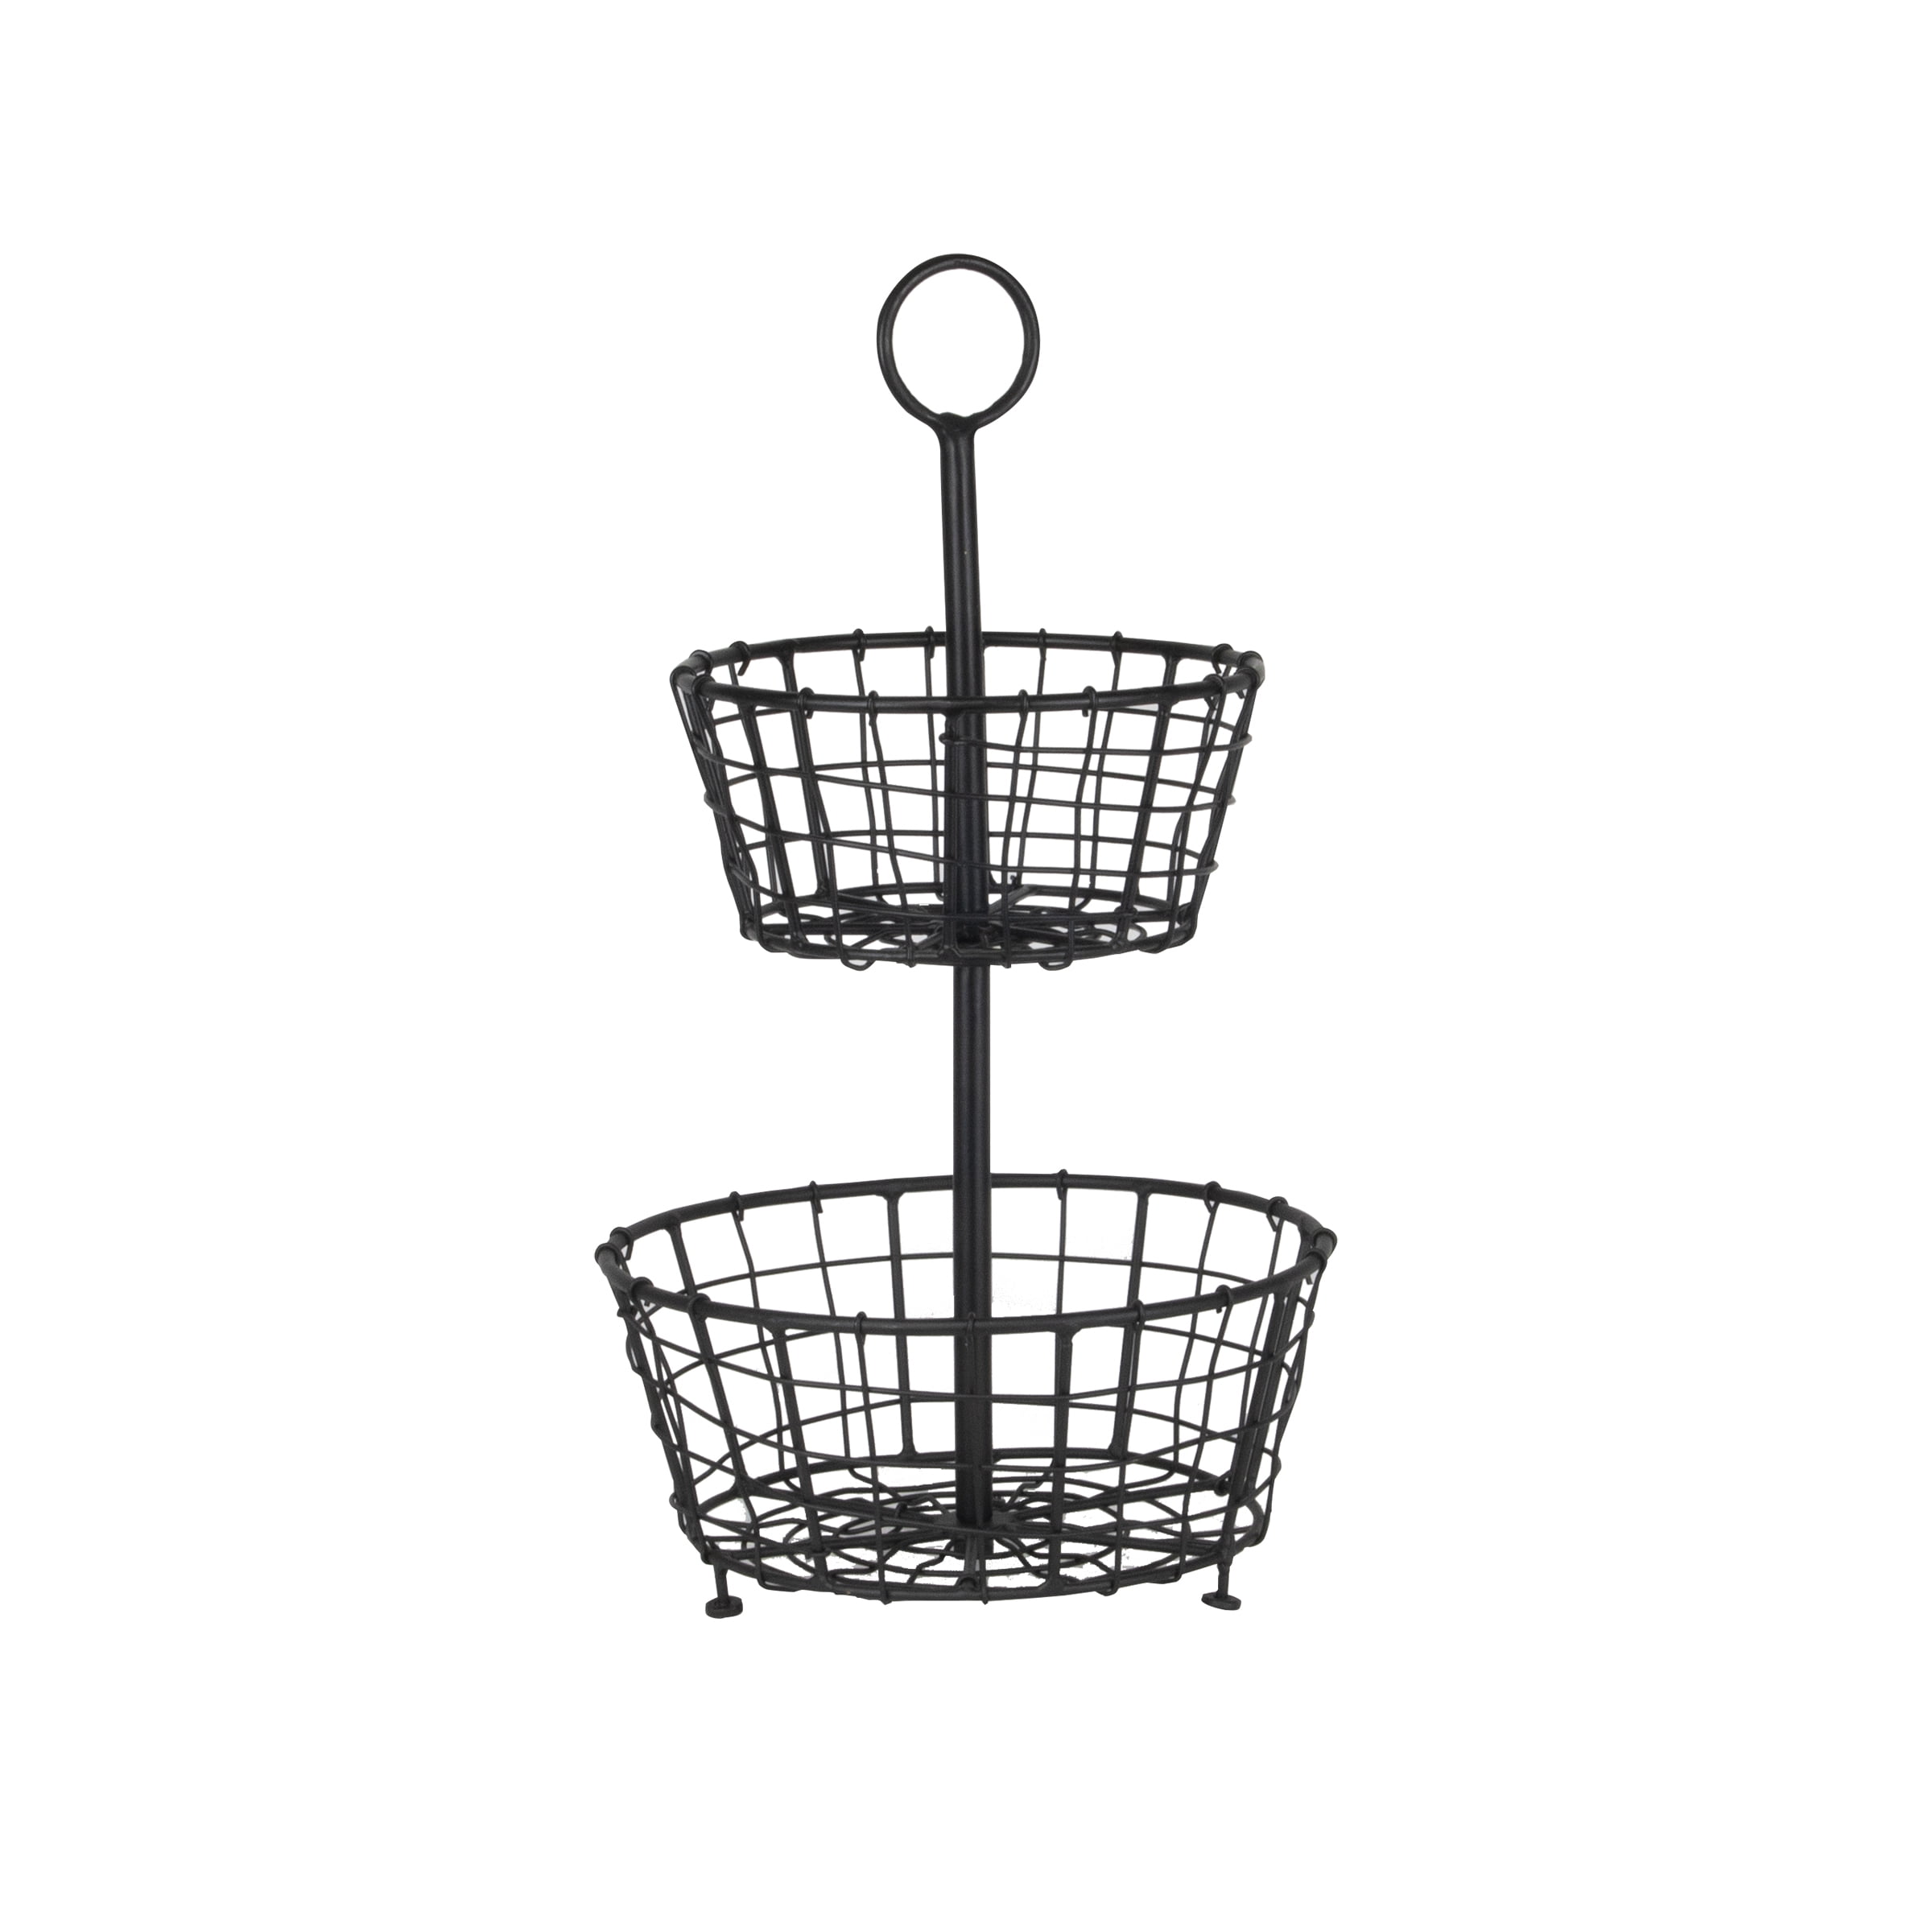 Vintage wire scroll basket/black metal wire basket/ fruit basket/ wire fruit basket/ storage wire basket/ decorative black metal wire basket